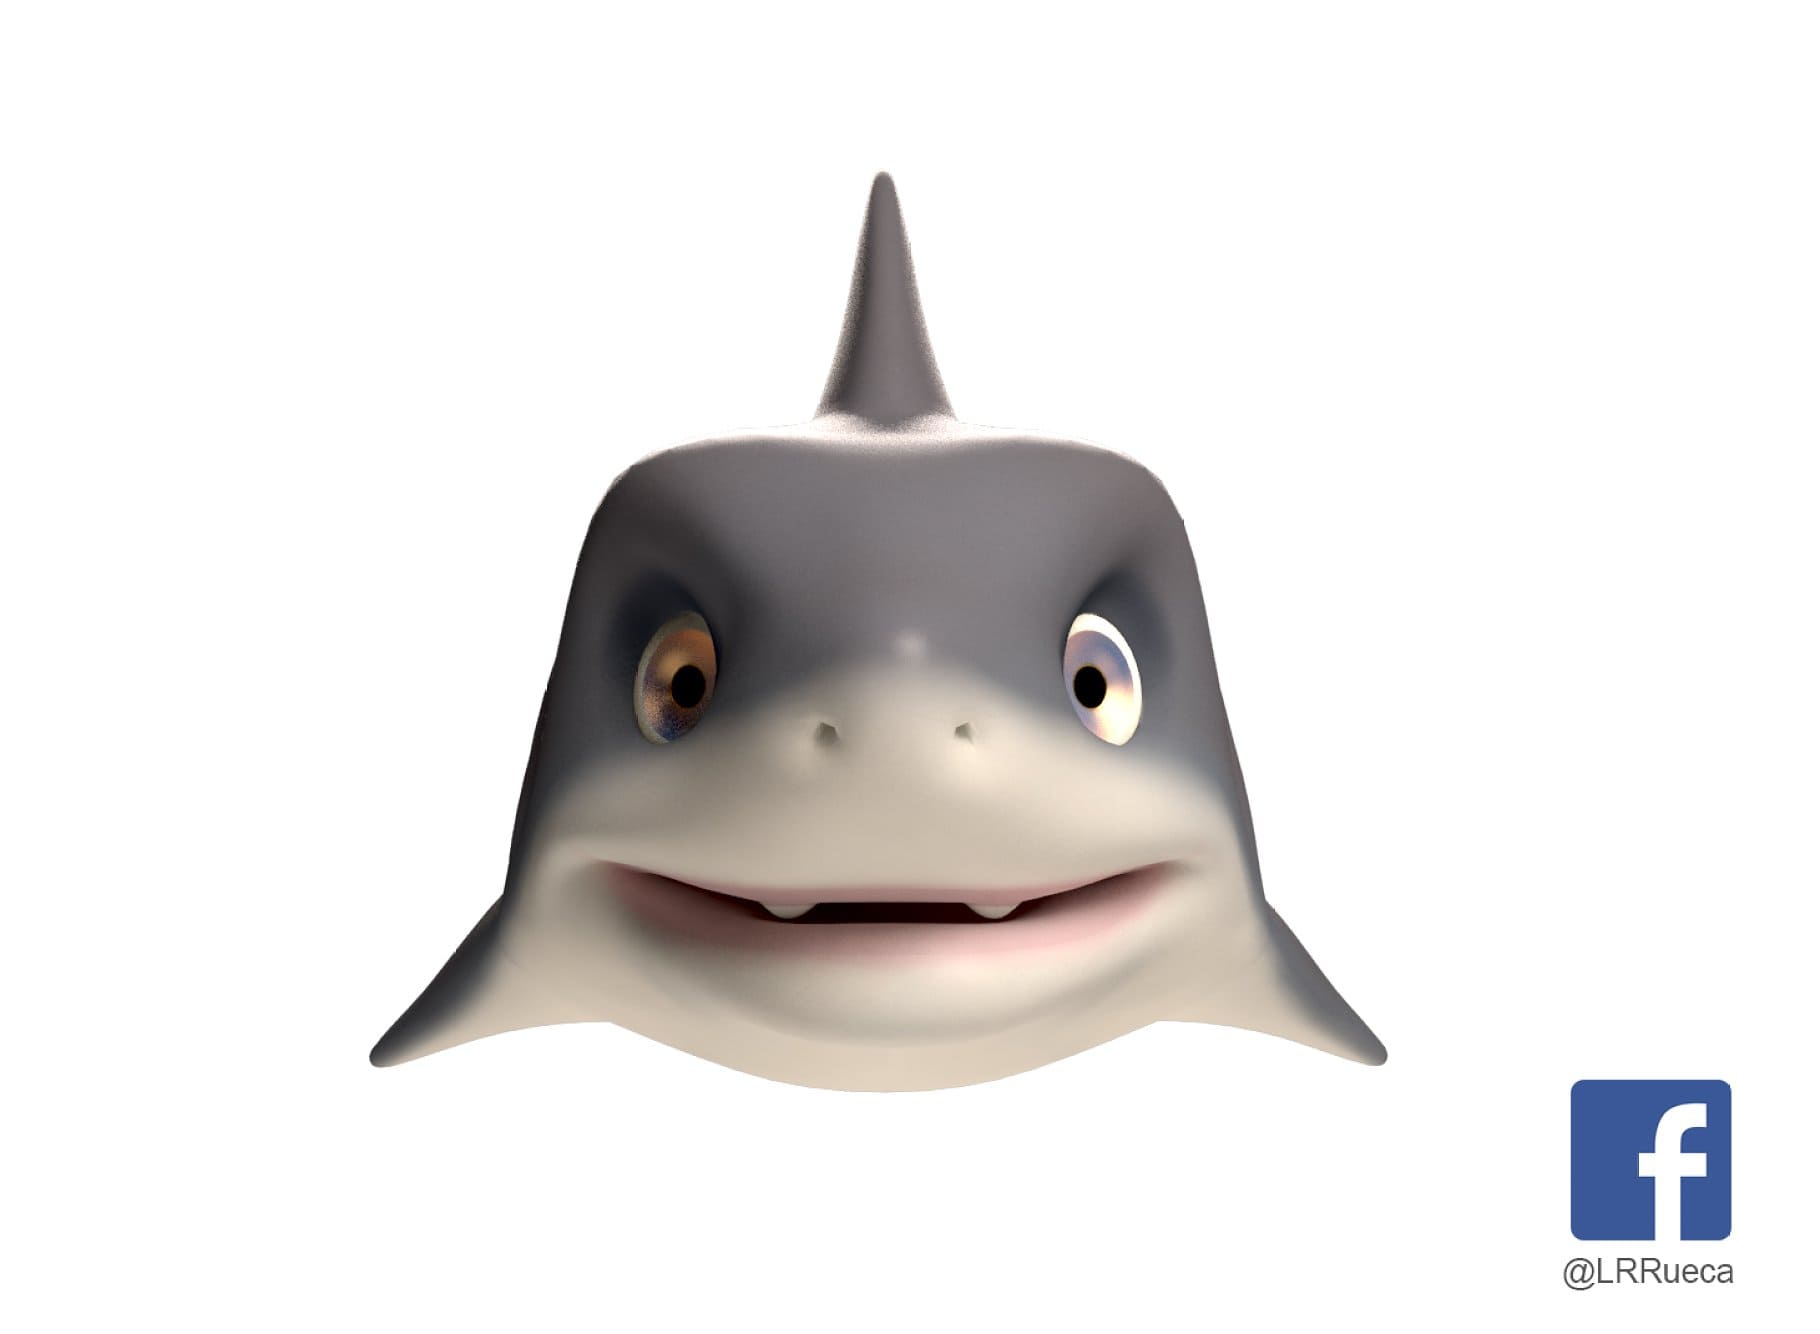 3D model of a stylized shark.